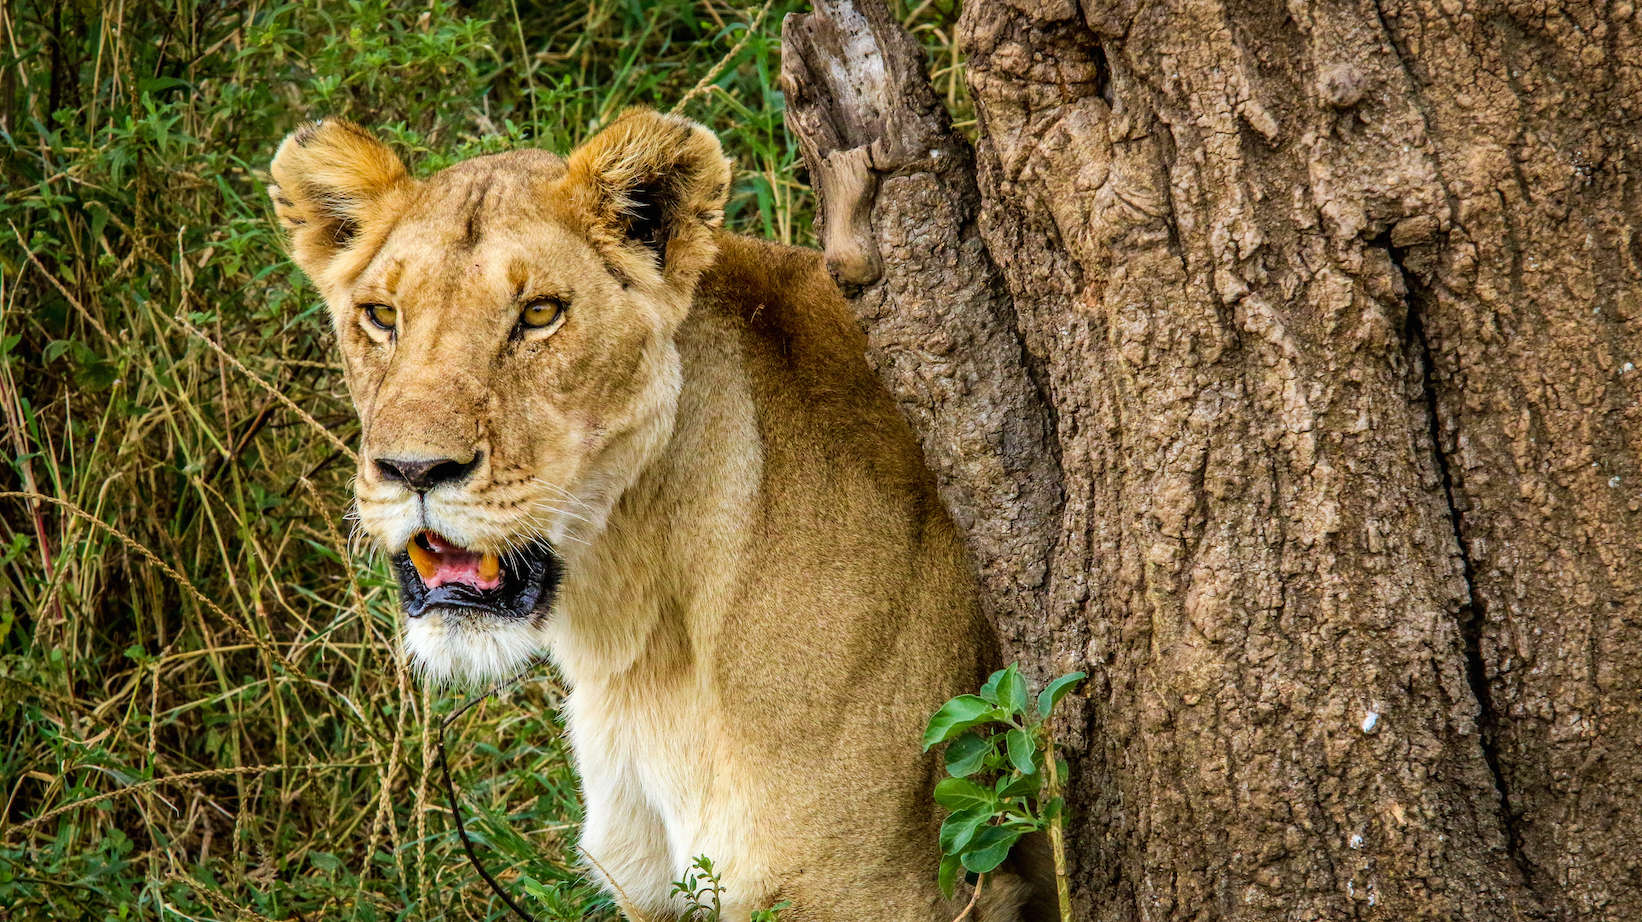 Things To Do in Tanzania: Safari in Serengeti National Park